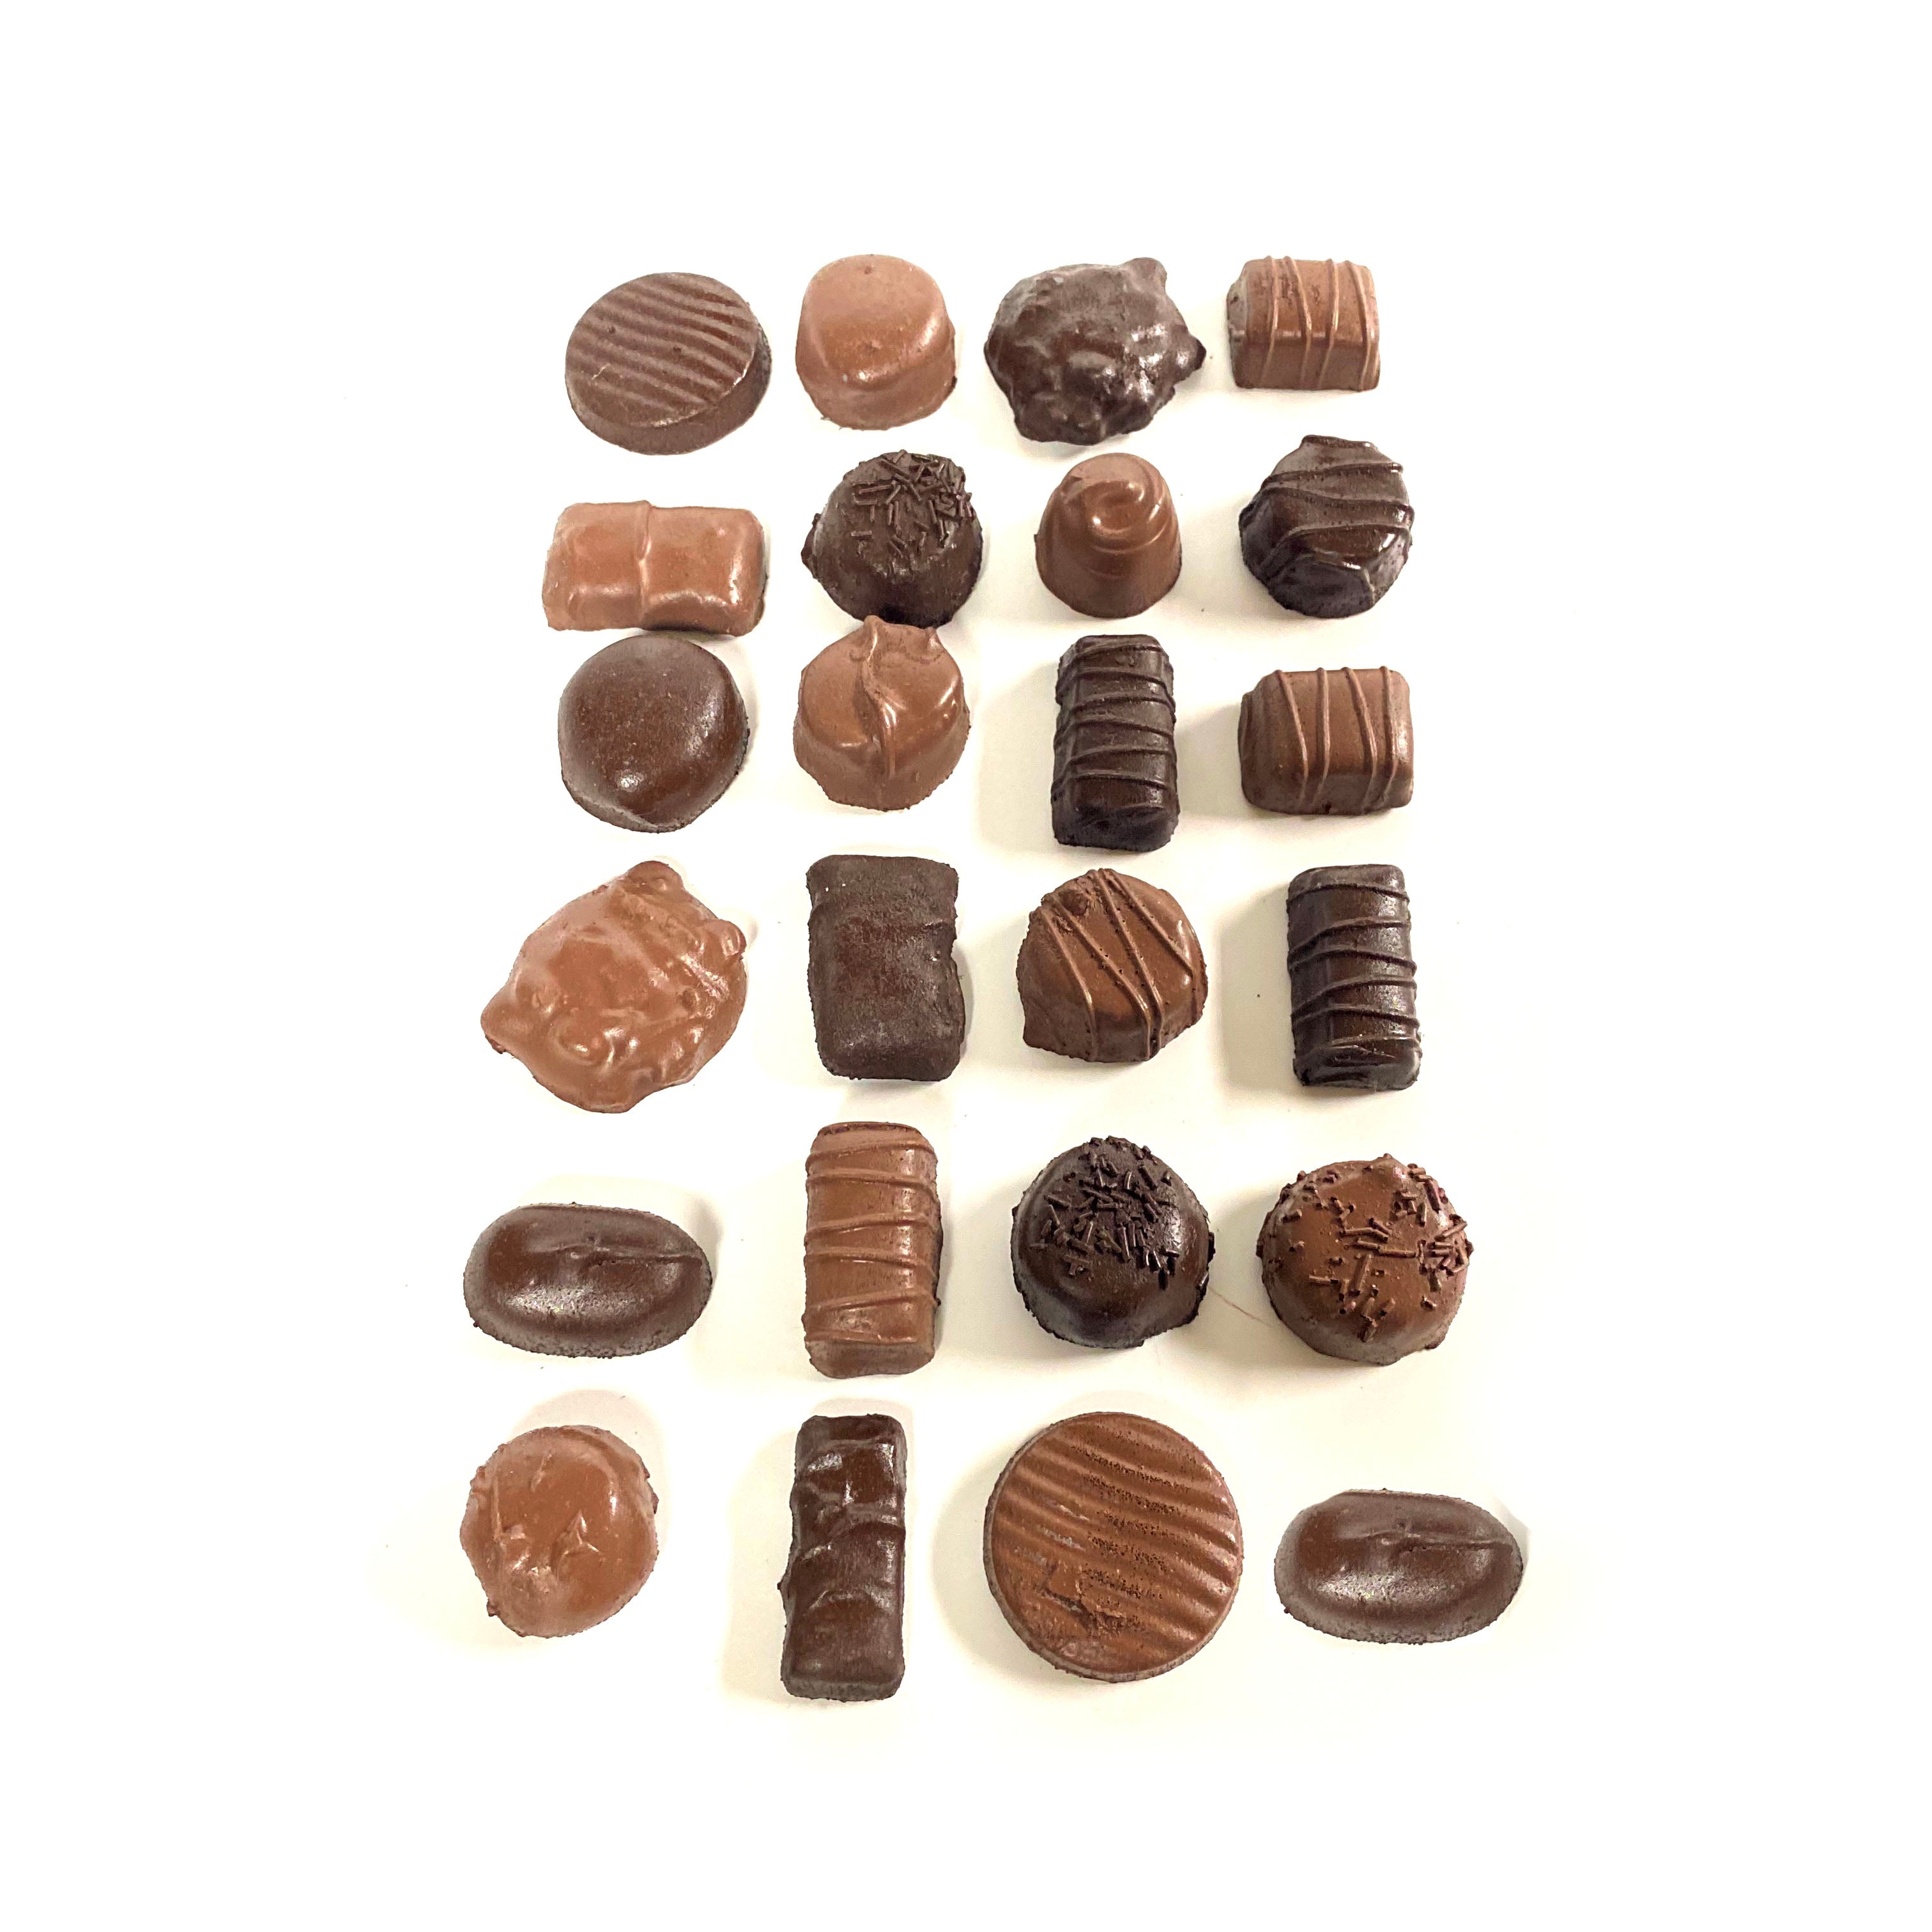 Prop Chocolate Candies Assortment 24 PIECE - DARK / MILK